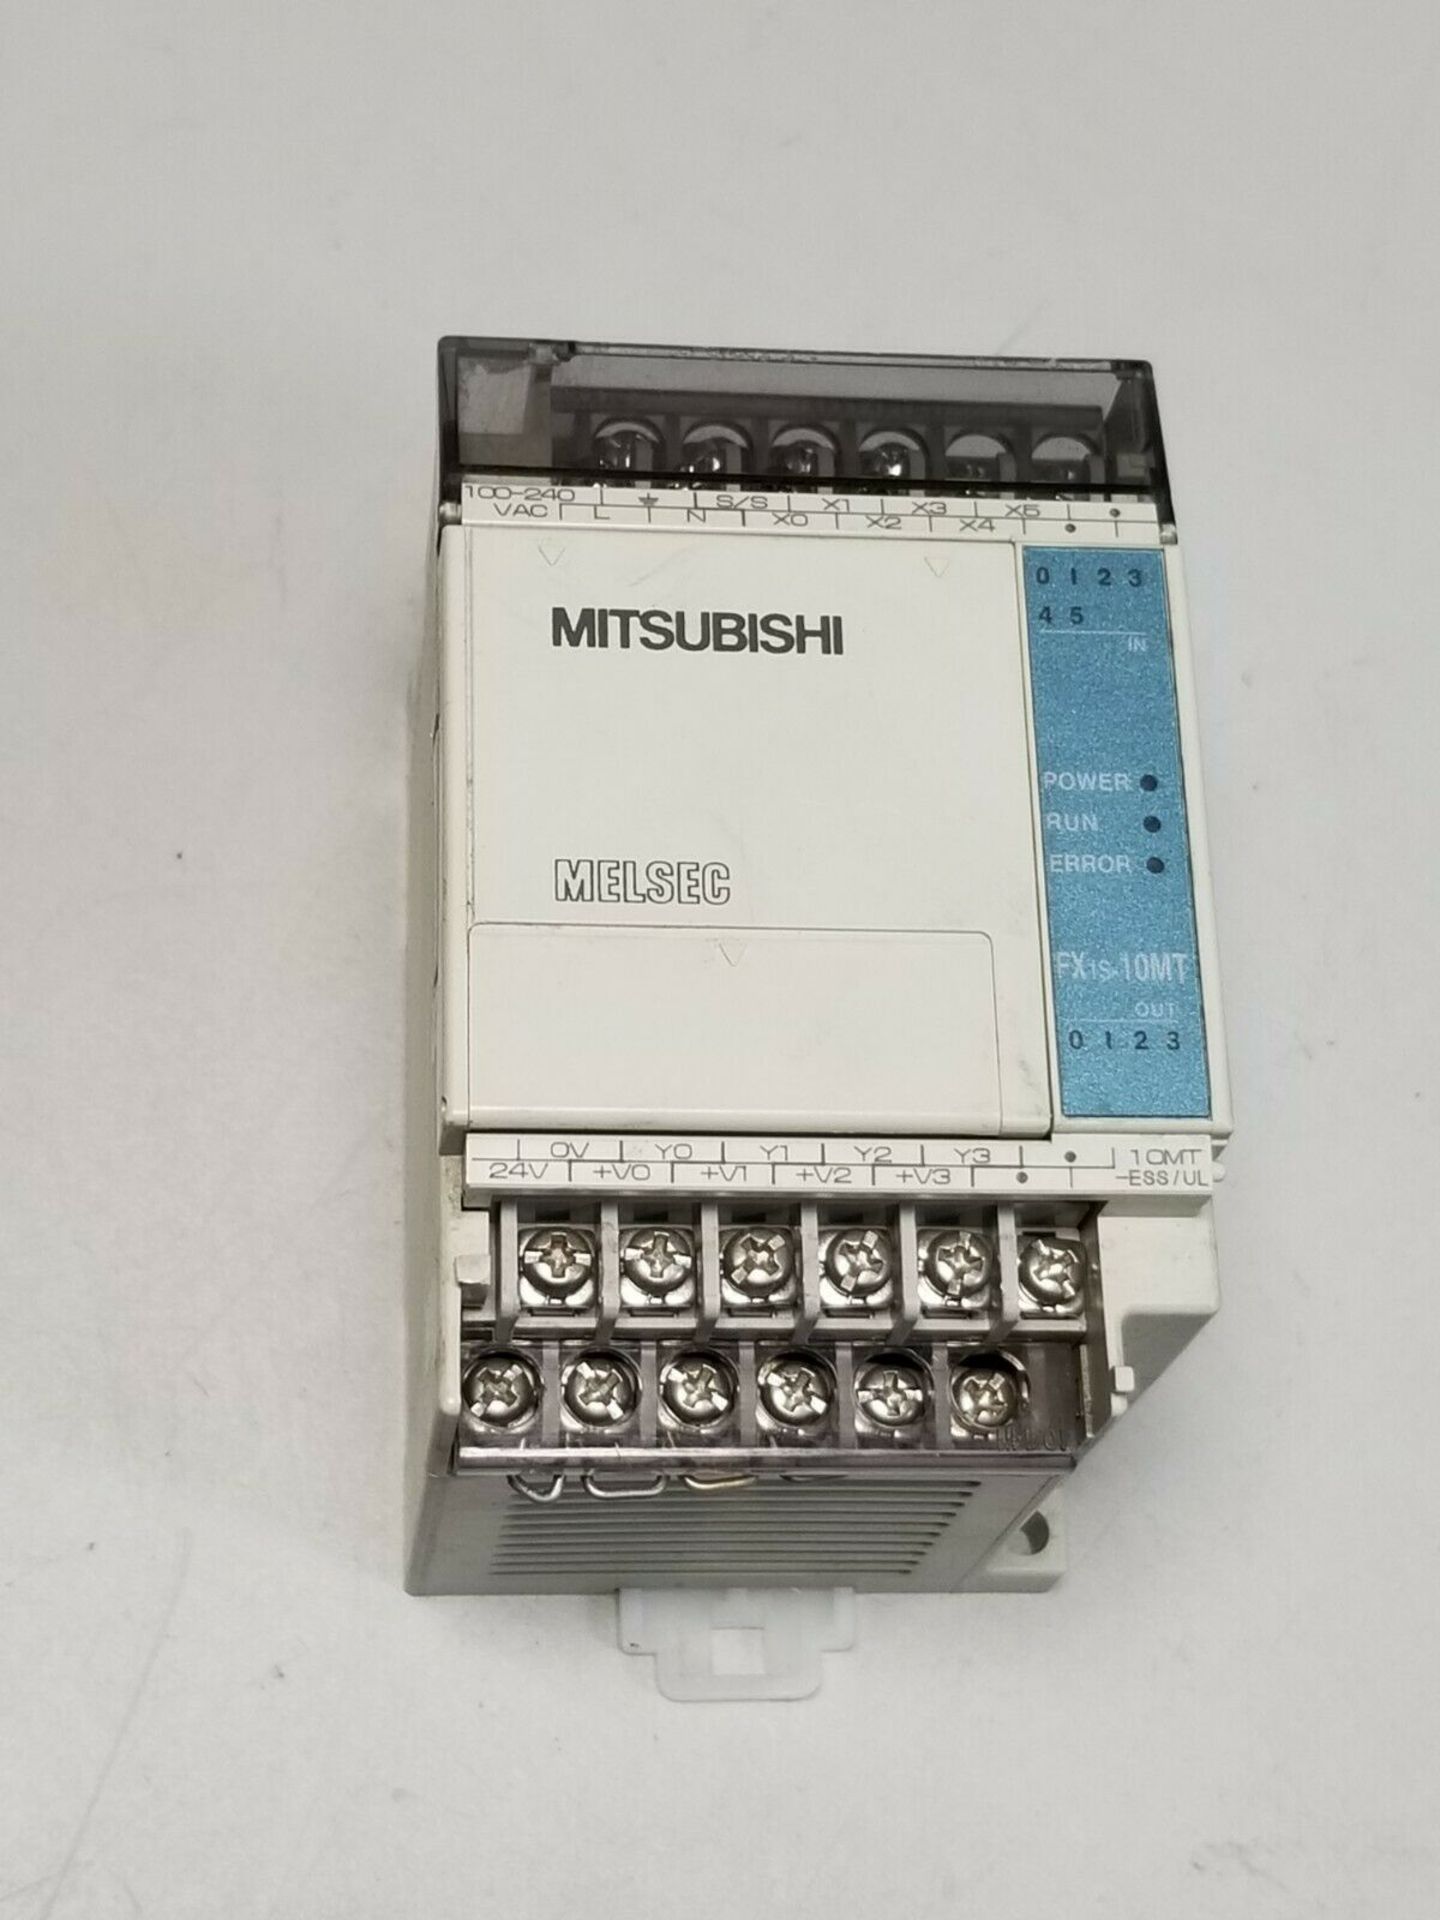 Mitsubishi Melsec PLC Programmable Controller